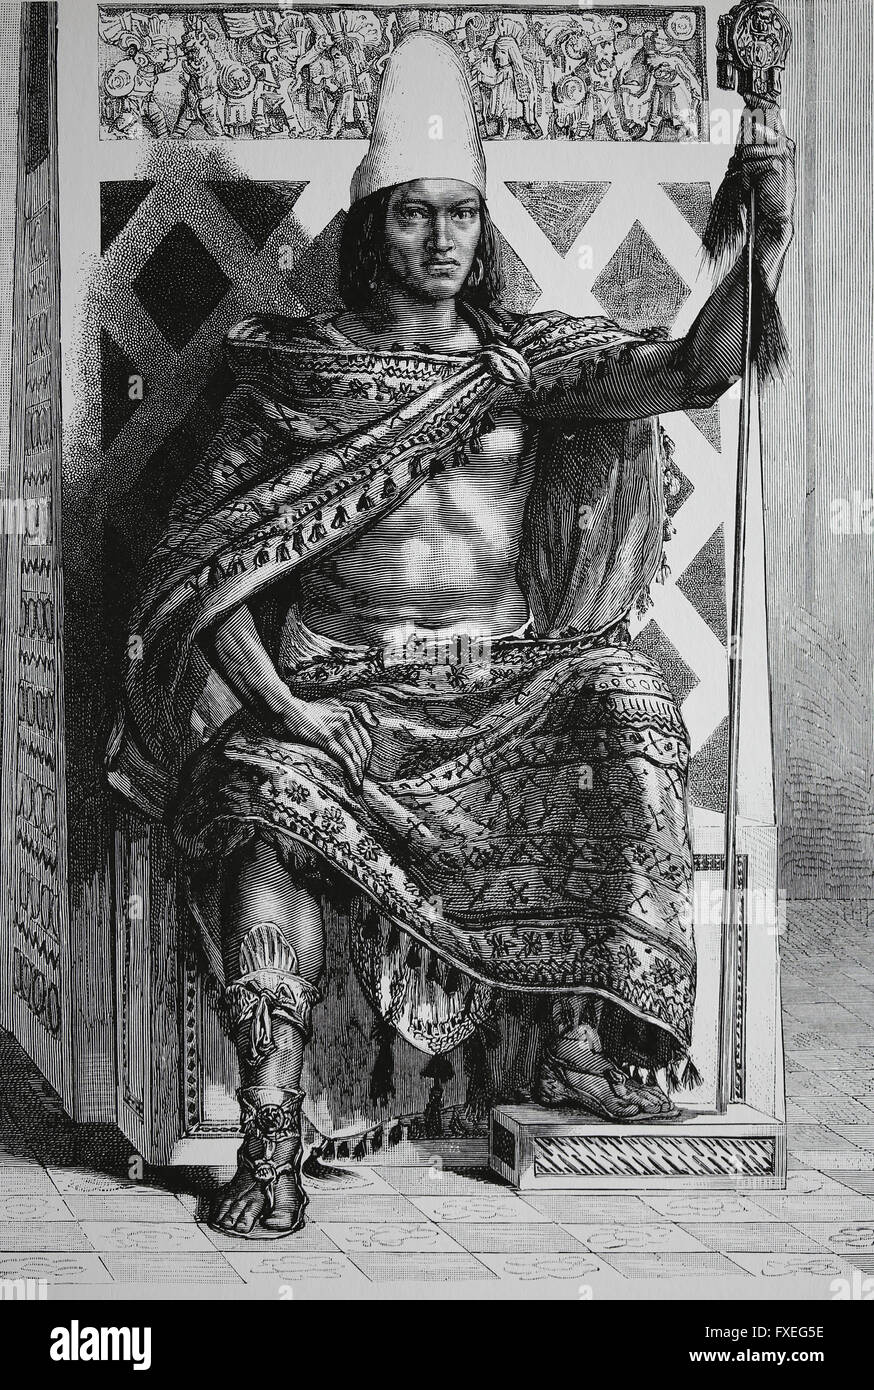 Maya king. Engraving, 19th century. America. Mexico. Stock Photo